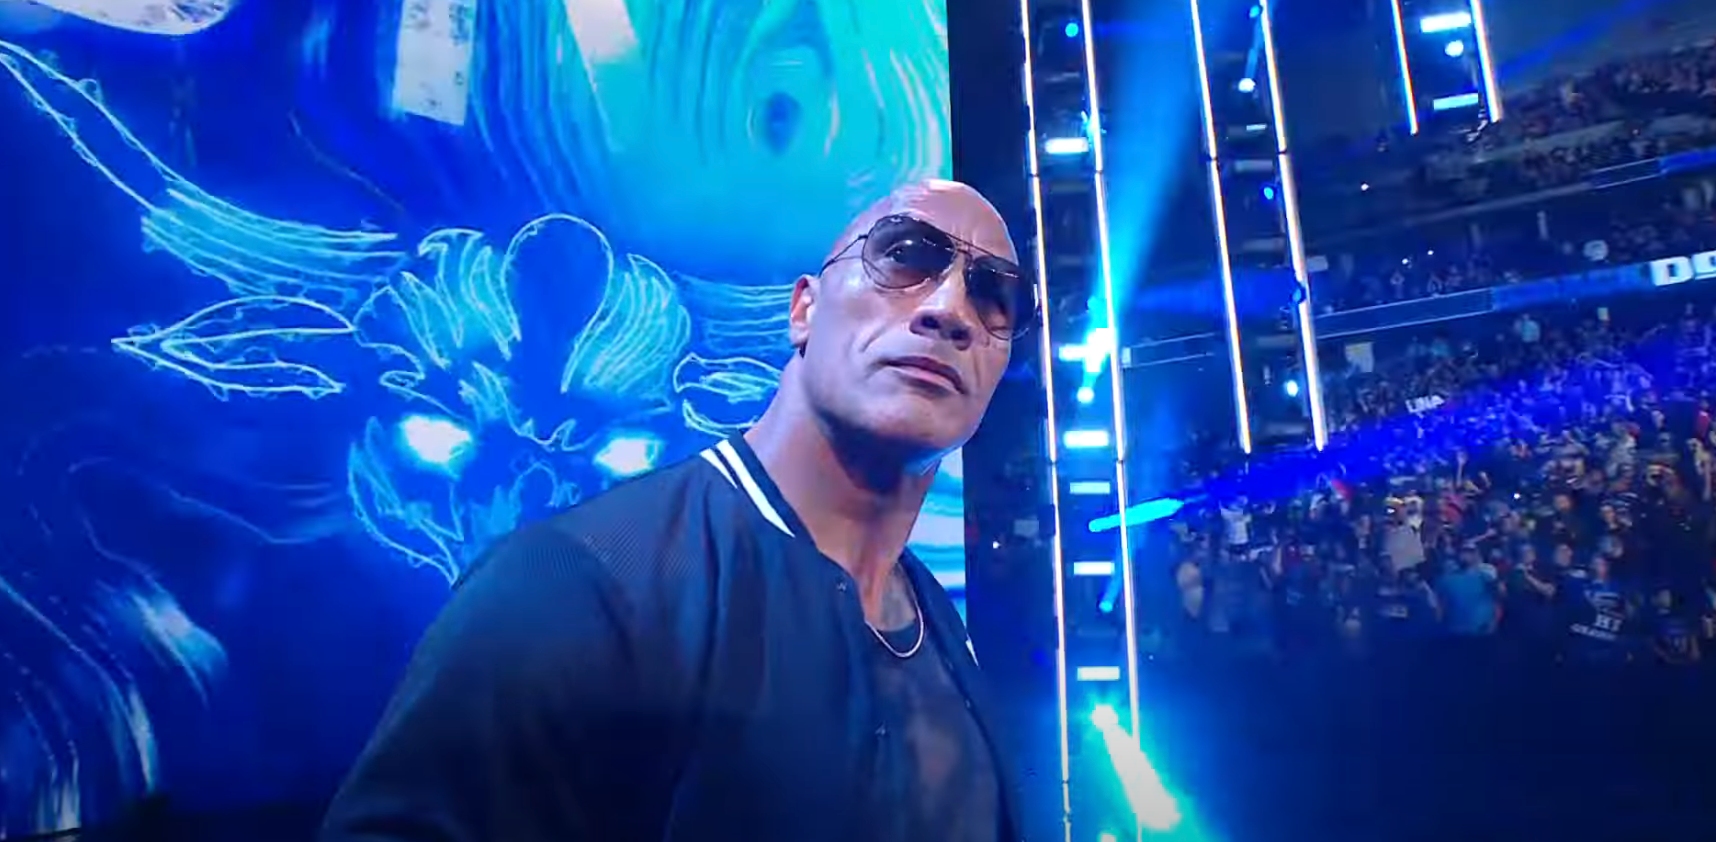 SmackDown 2019: Dwayne 'The Rock' Johnson to return to WWE